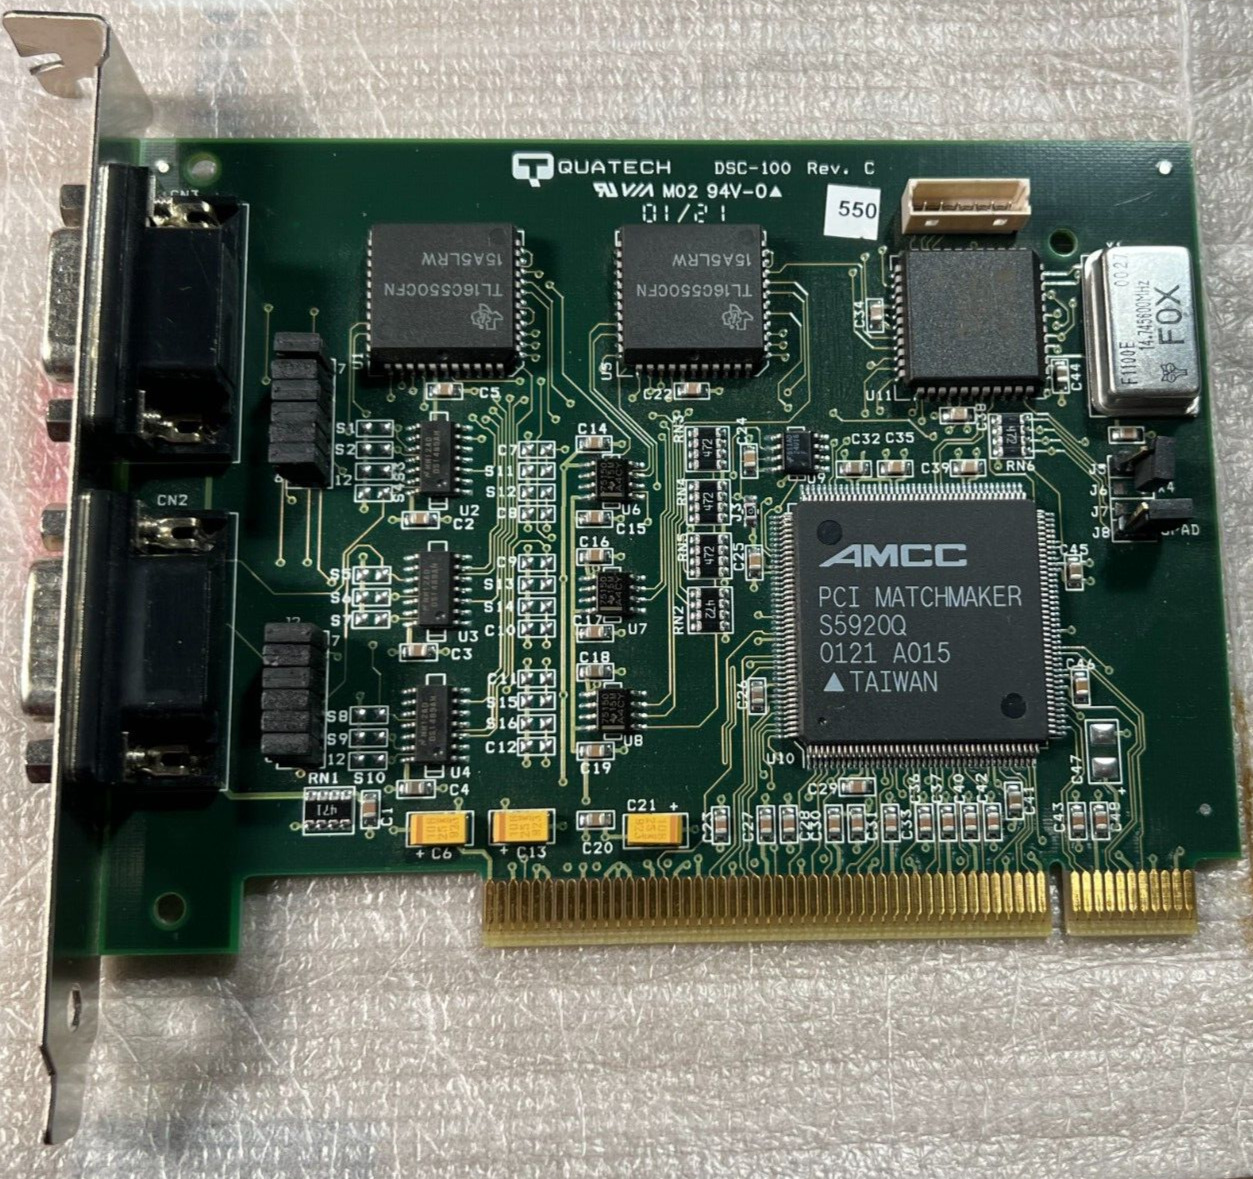 NEW IBM/QUATECH 2-PORT RS232 PCI SERIAL ADAPTER  22P7573 / 34P8383  DSC-100-550